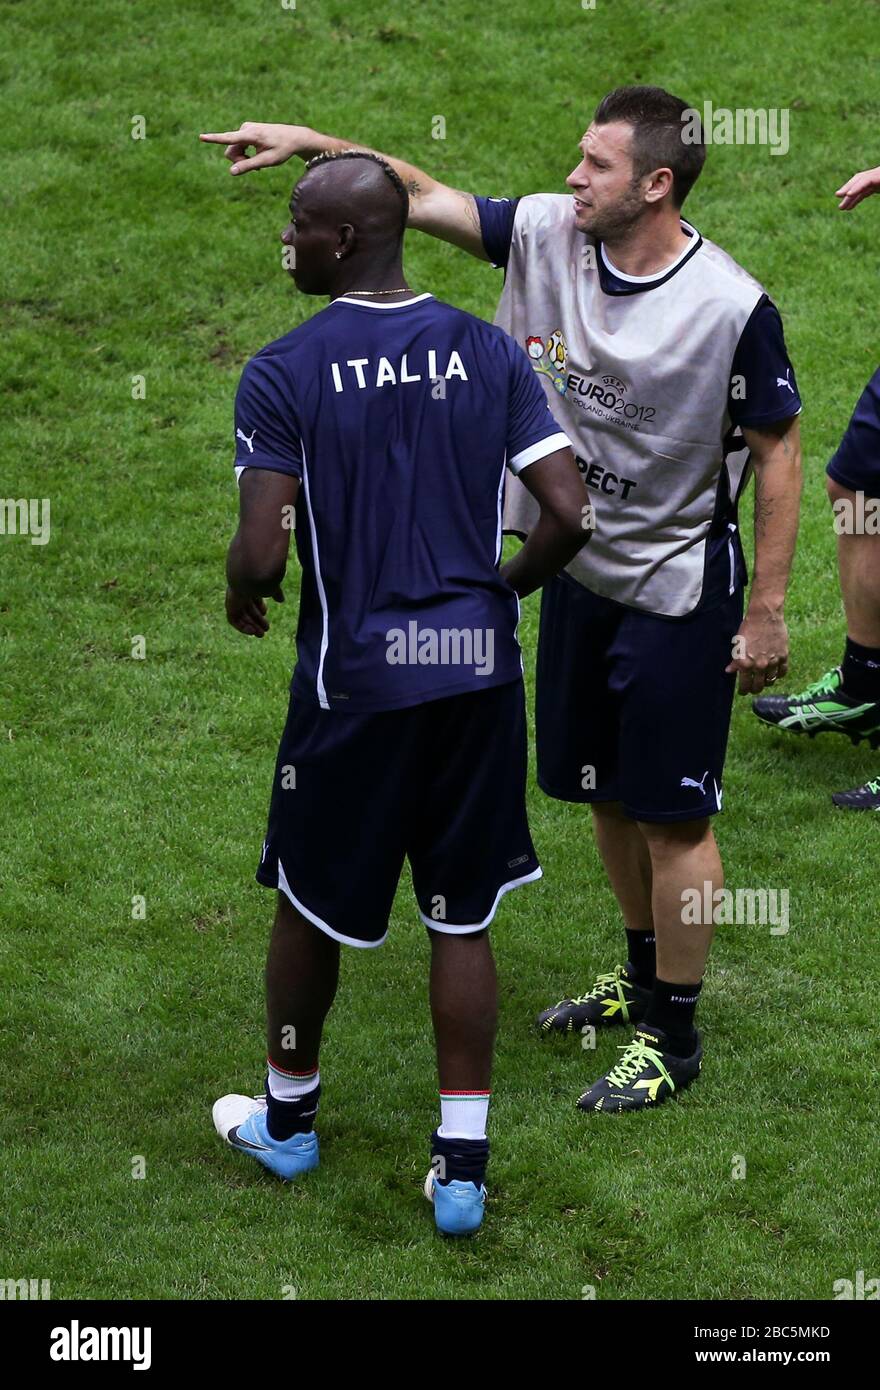 Italy's Mario Balotelli and Antonio Cassano during the training session Stock Photo